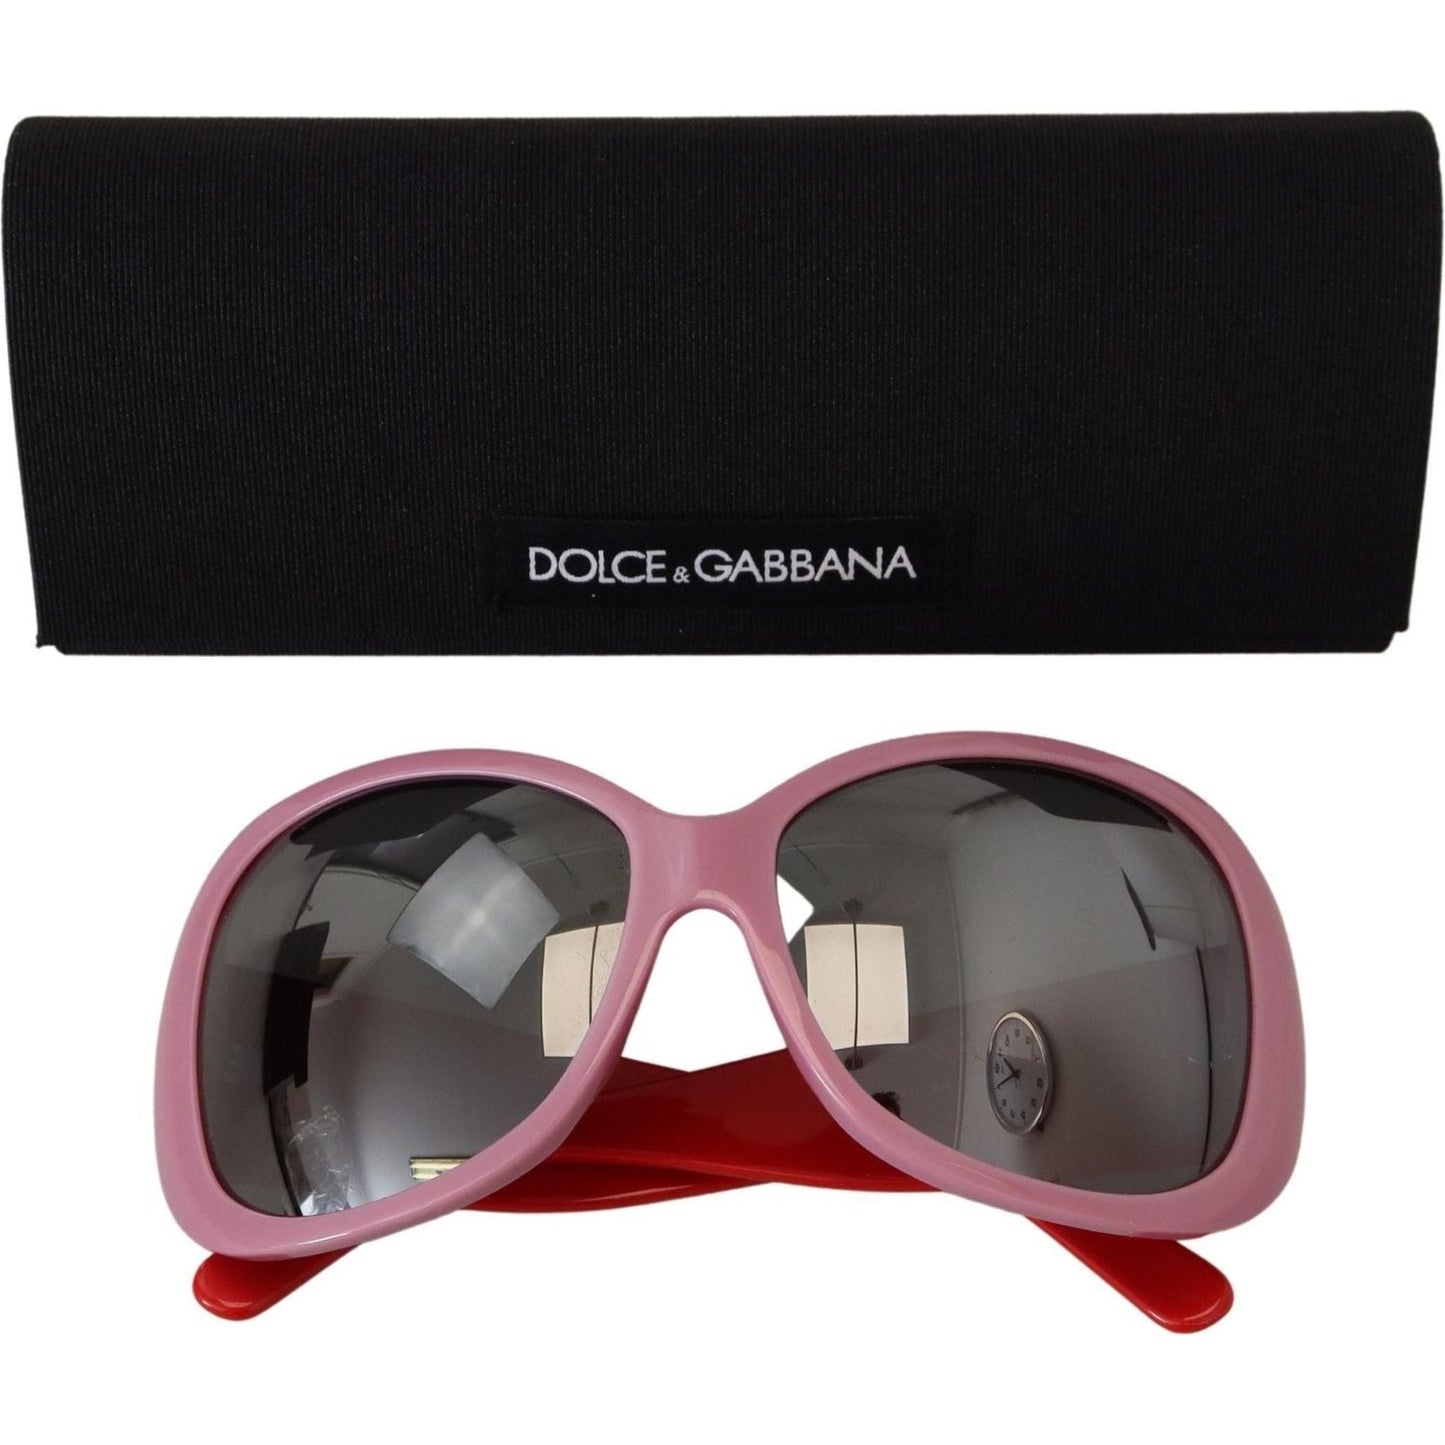 Dolce & Gabbana Chic Oversized UV-Protection Sunglasses pink-red-plastic-frame-oversized-dg4033-sunglasses IMG_4793-f27f038e-af9.jpg